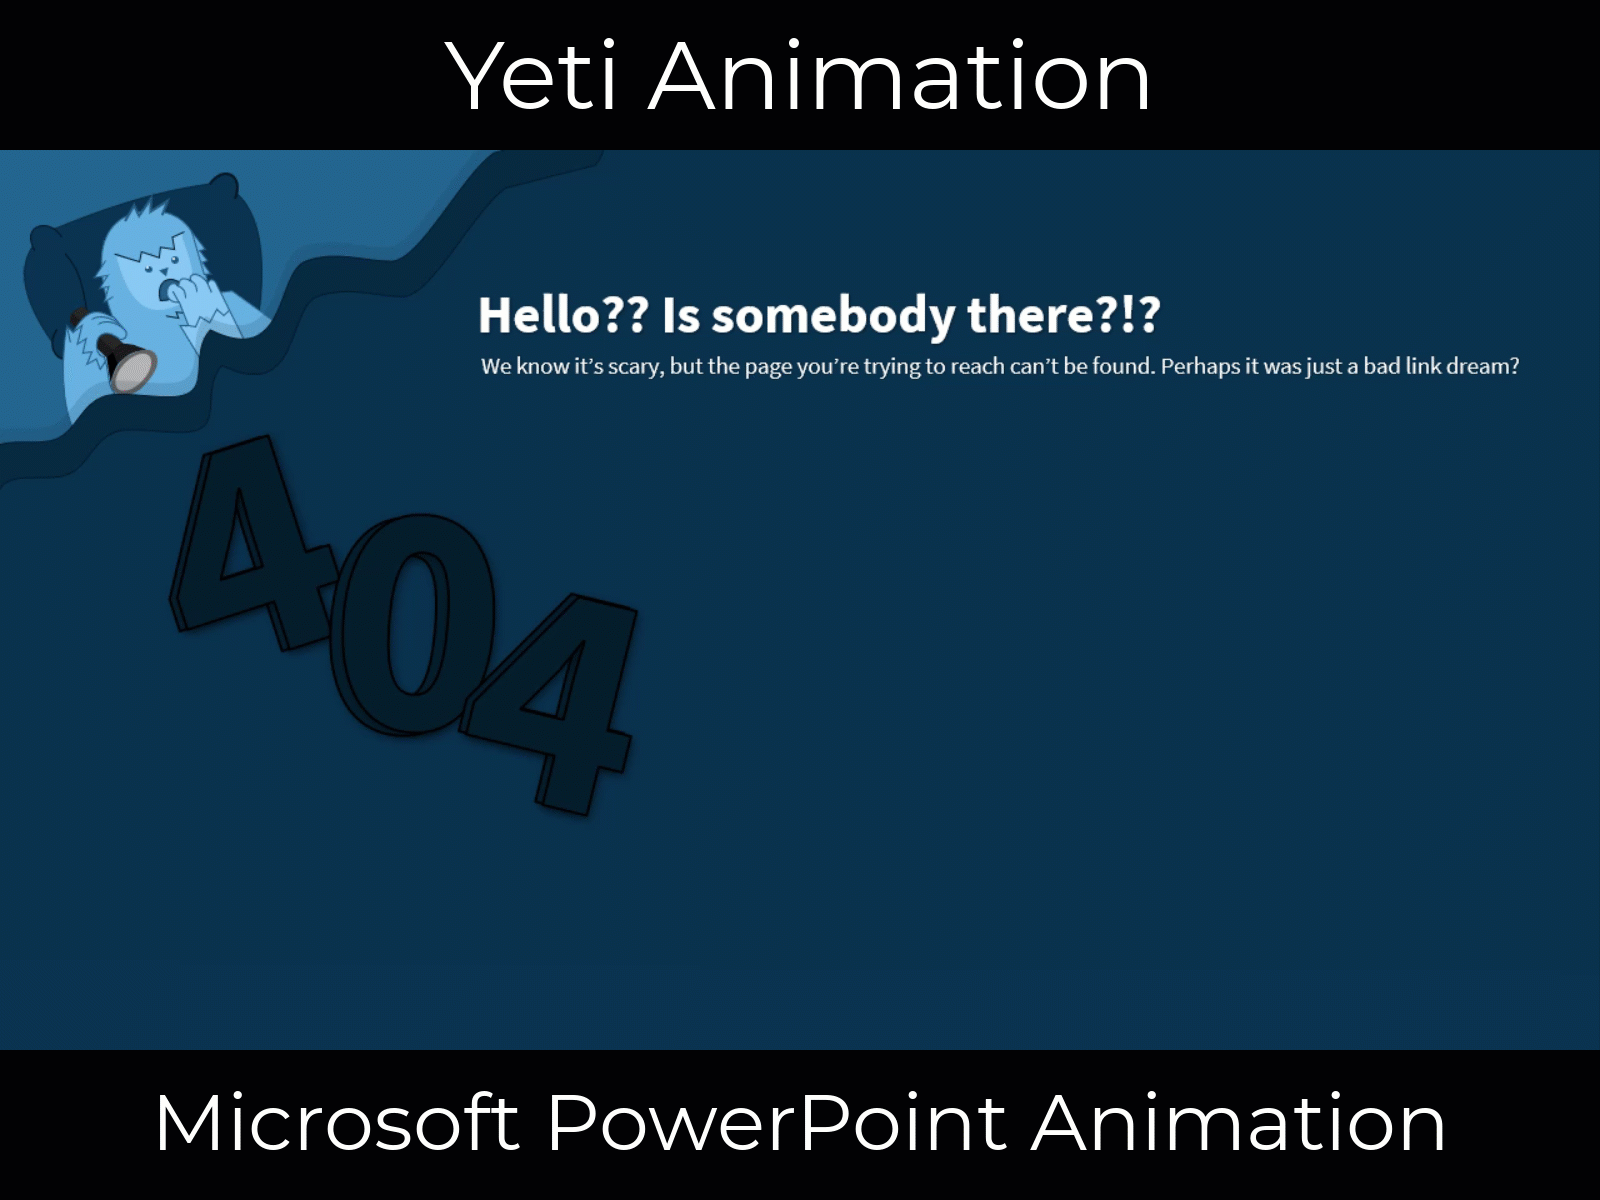 Yeti Animation in PowerPoint